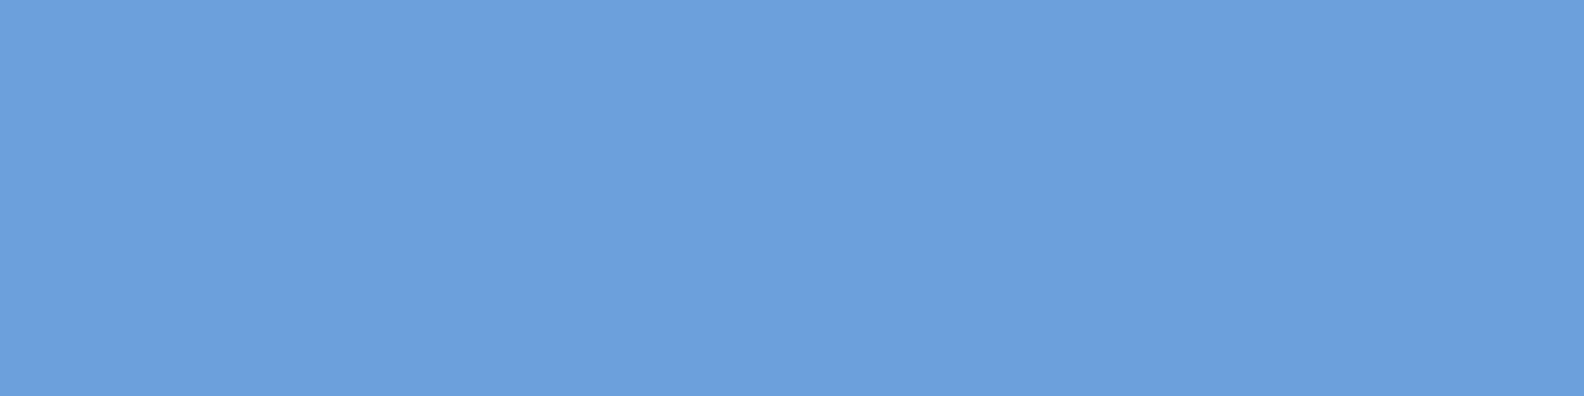 1584x396 Little Boy Blue Solid Color Background